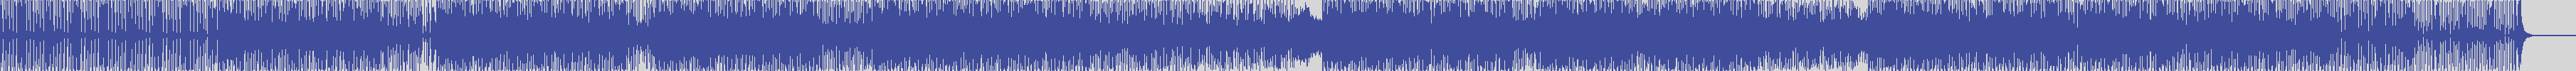 atomic_recordings [AR017] Tektight - Anytime [Original Mix] audio wave form